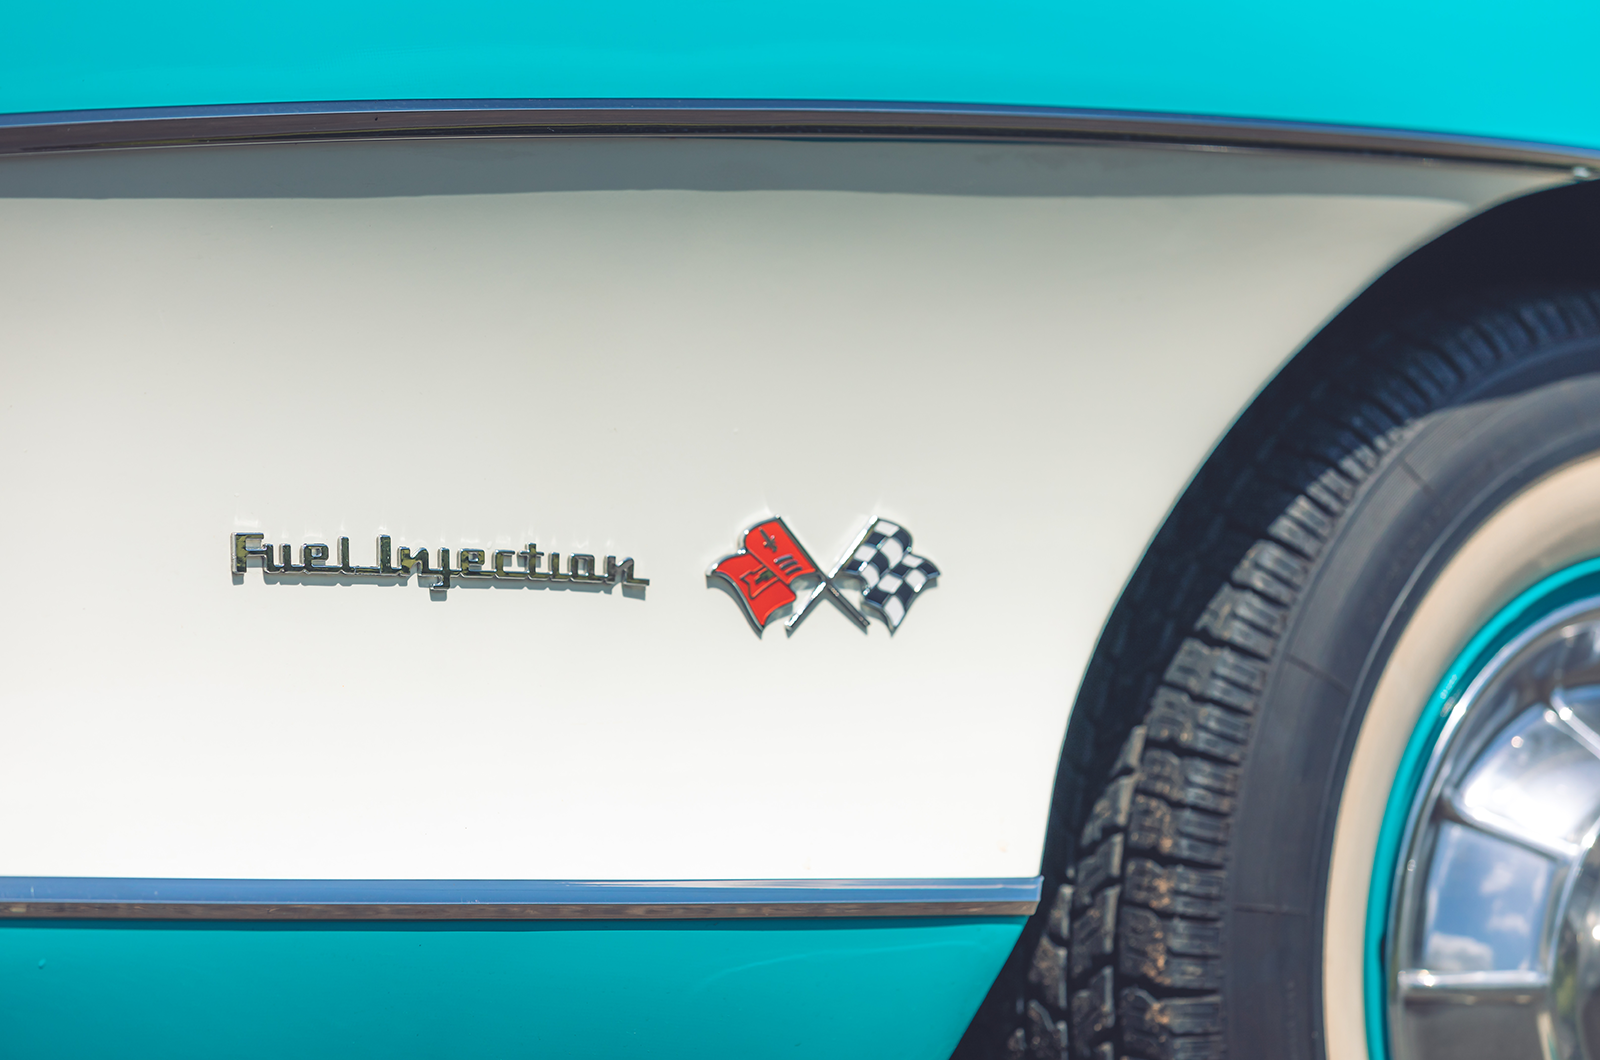 Classic & Sports Car – Chevrolet Corvette at 70: America’s favourite sports car